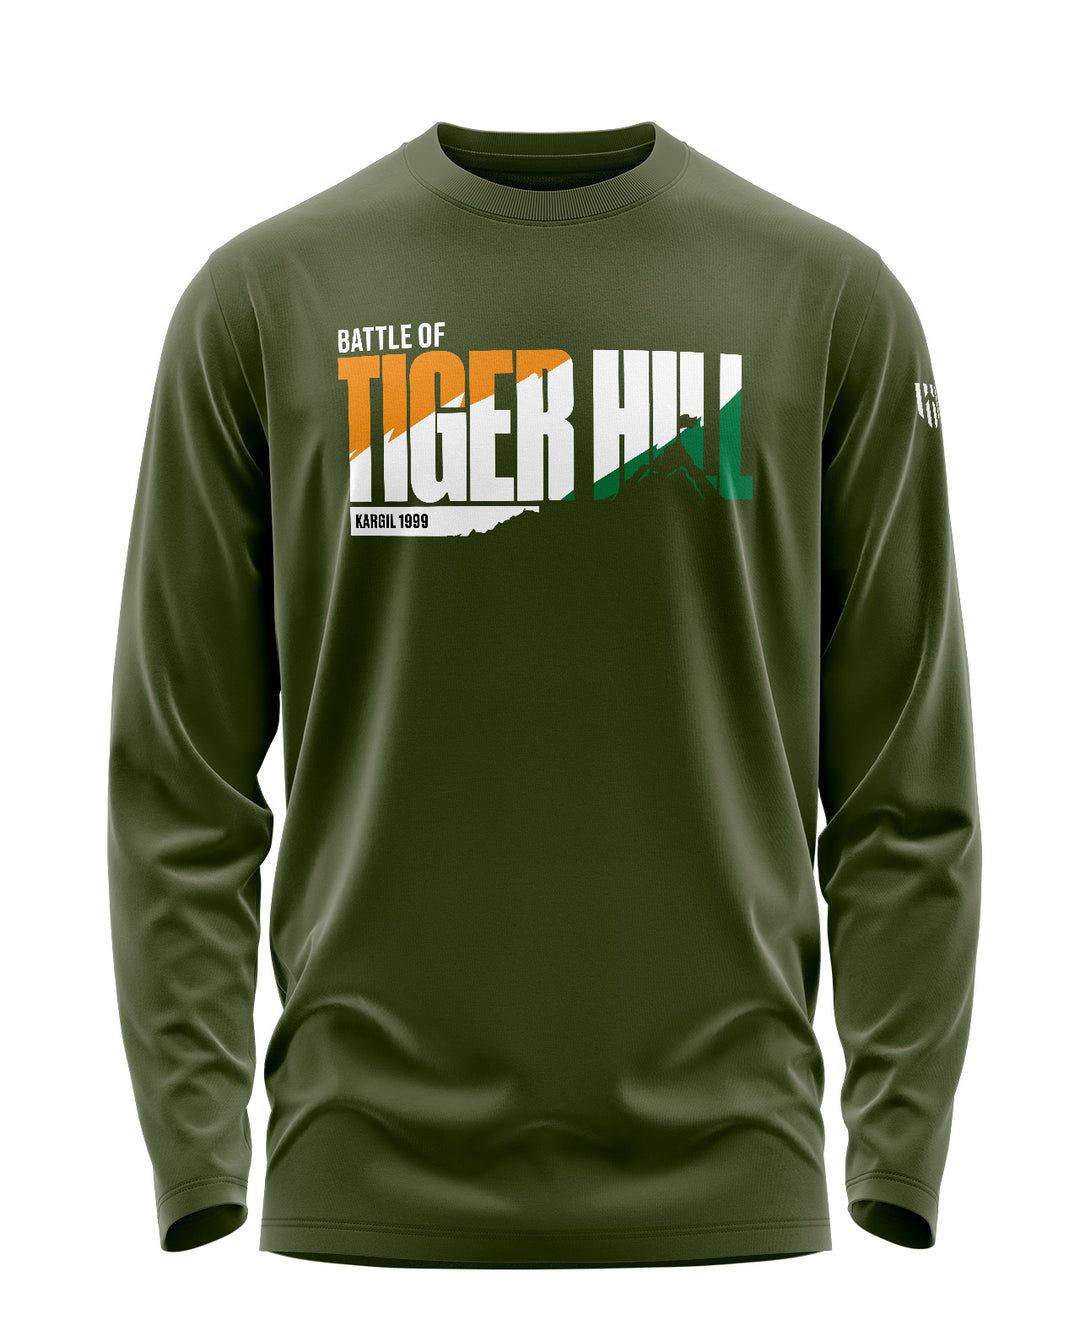 Battle of Tiger Hill Full Sleeve T-Shirt